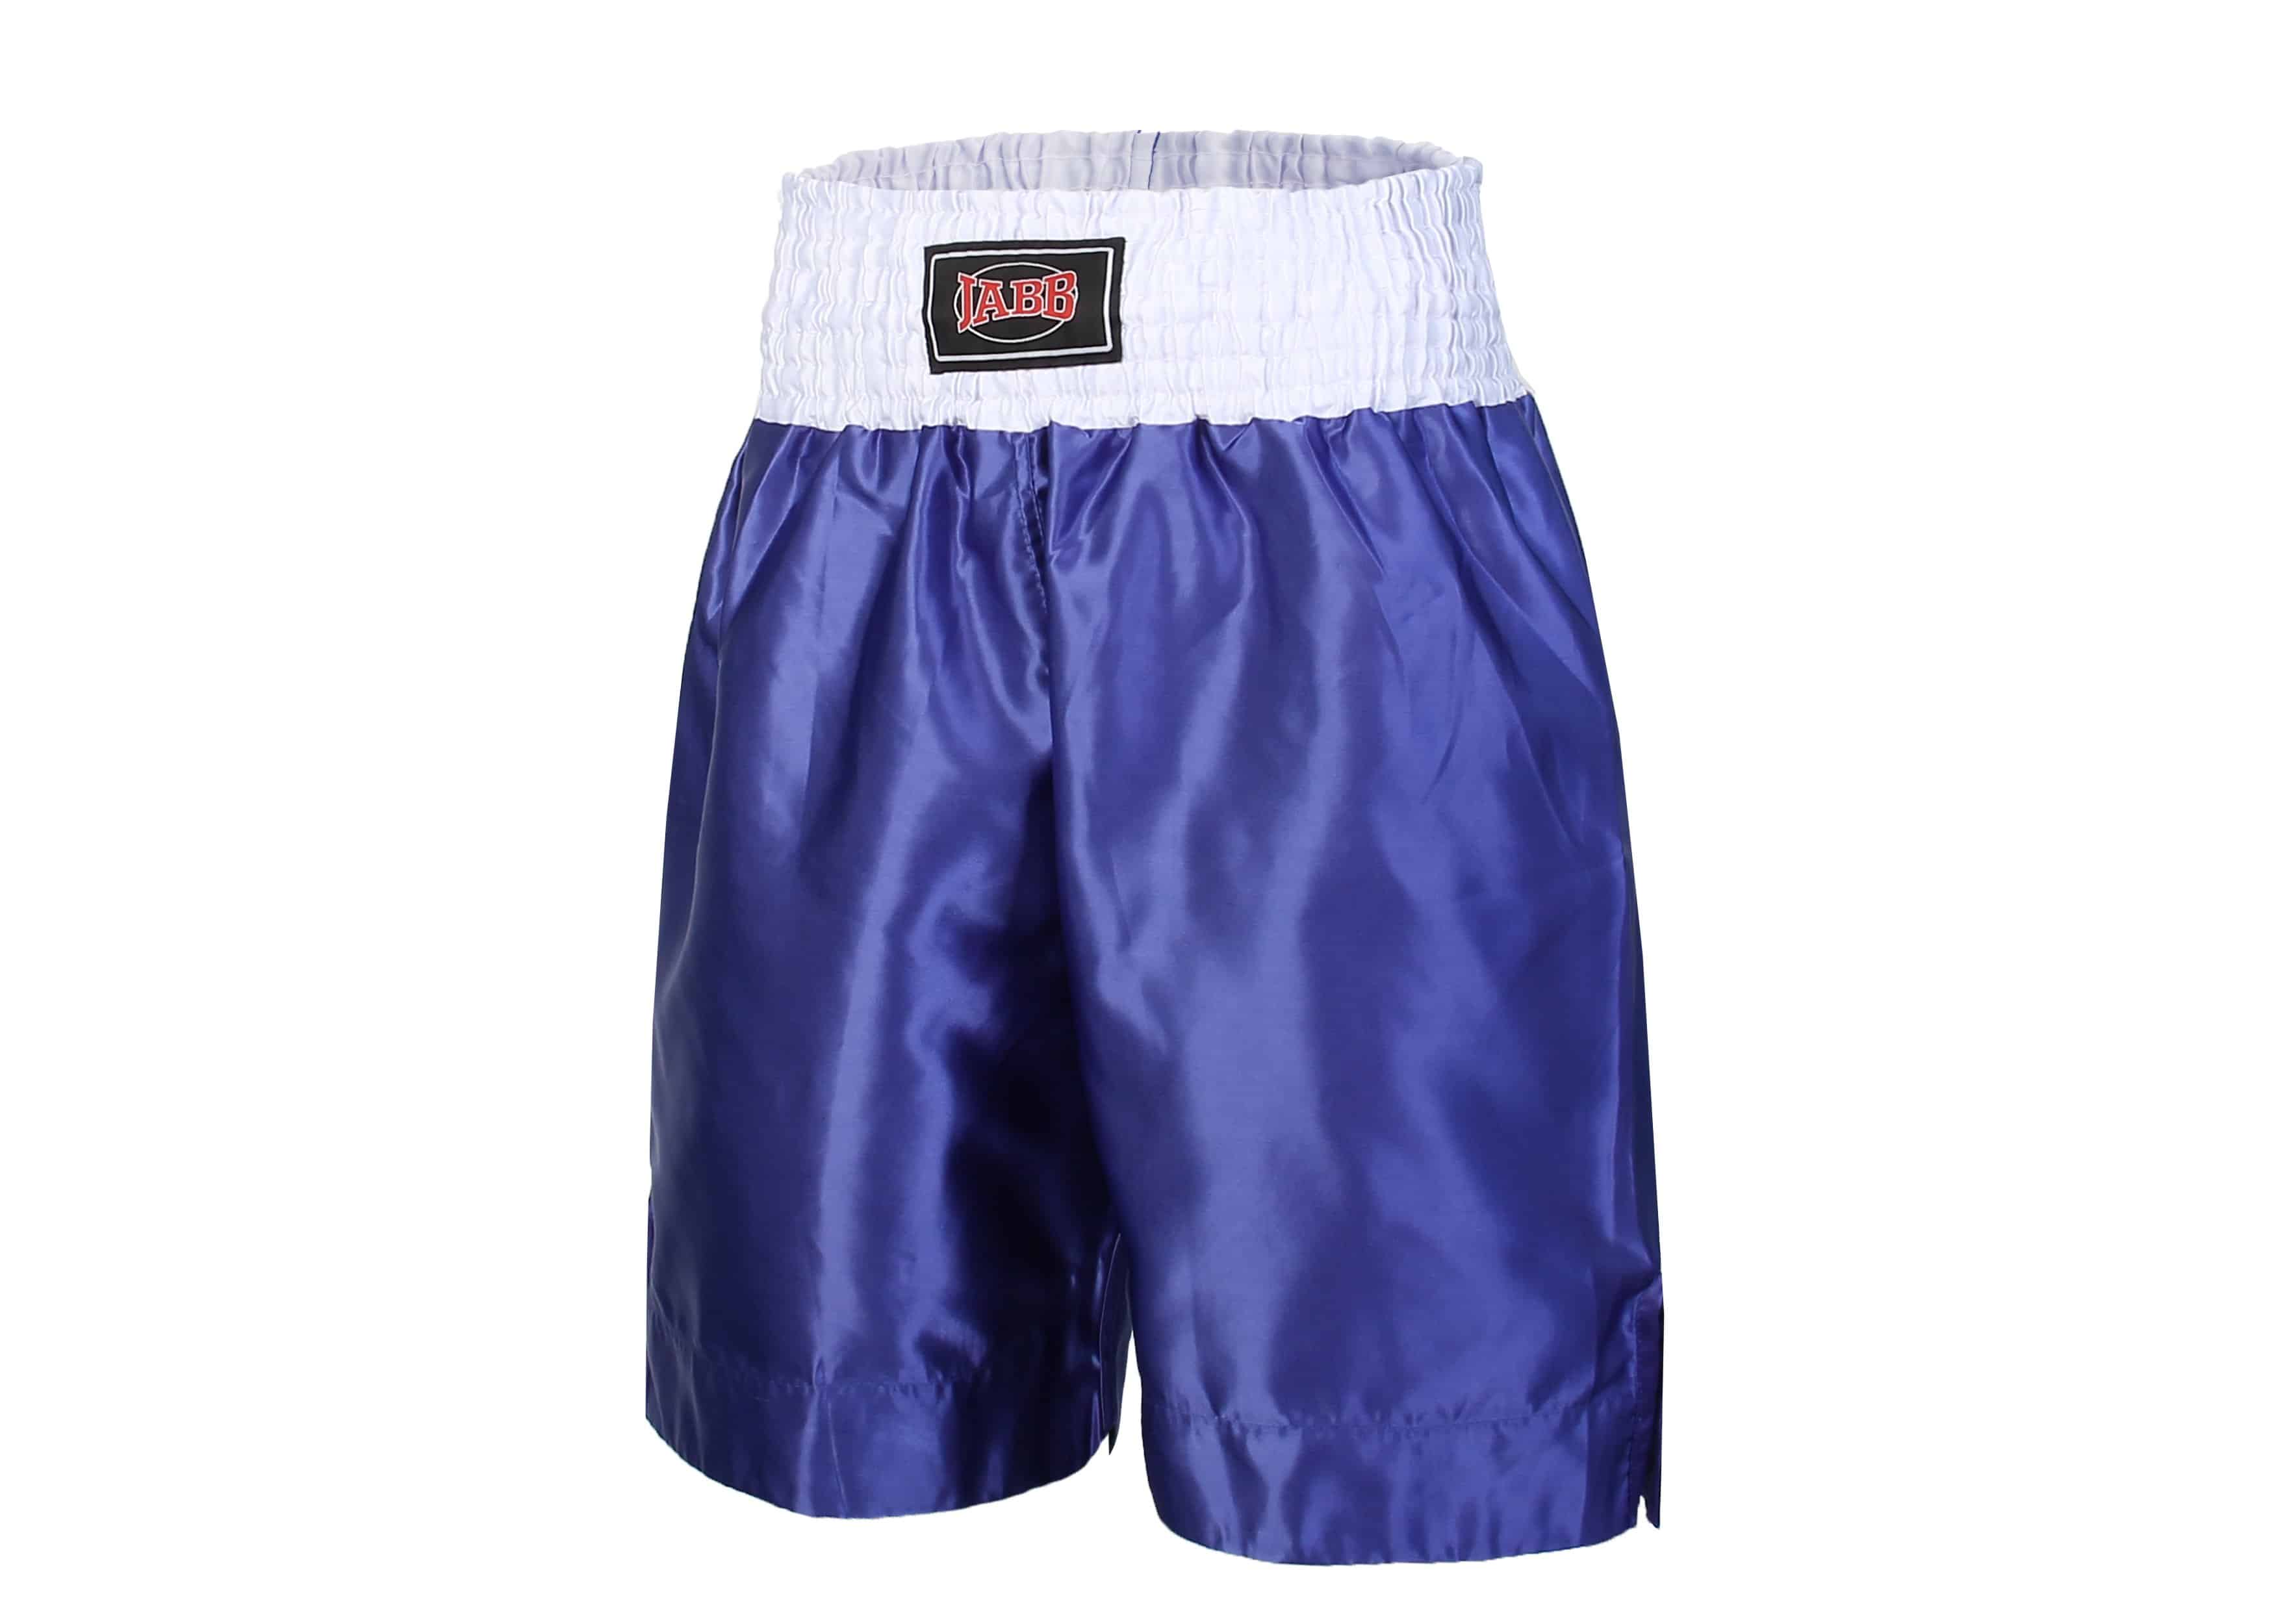 Боксерские шорты Jabb BS от магазина Супер Спорт